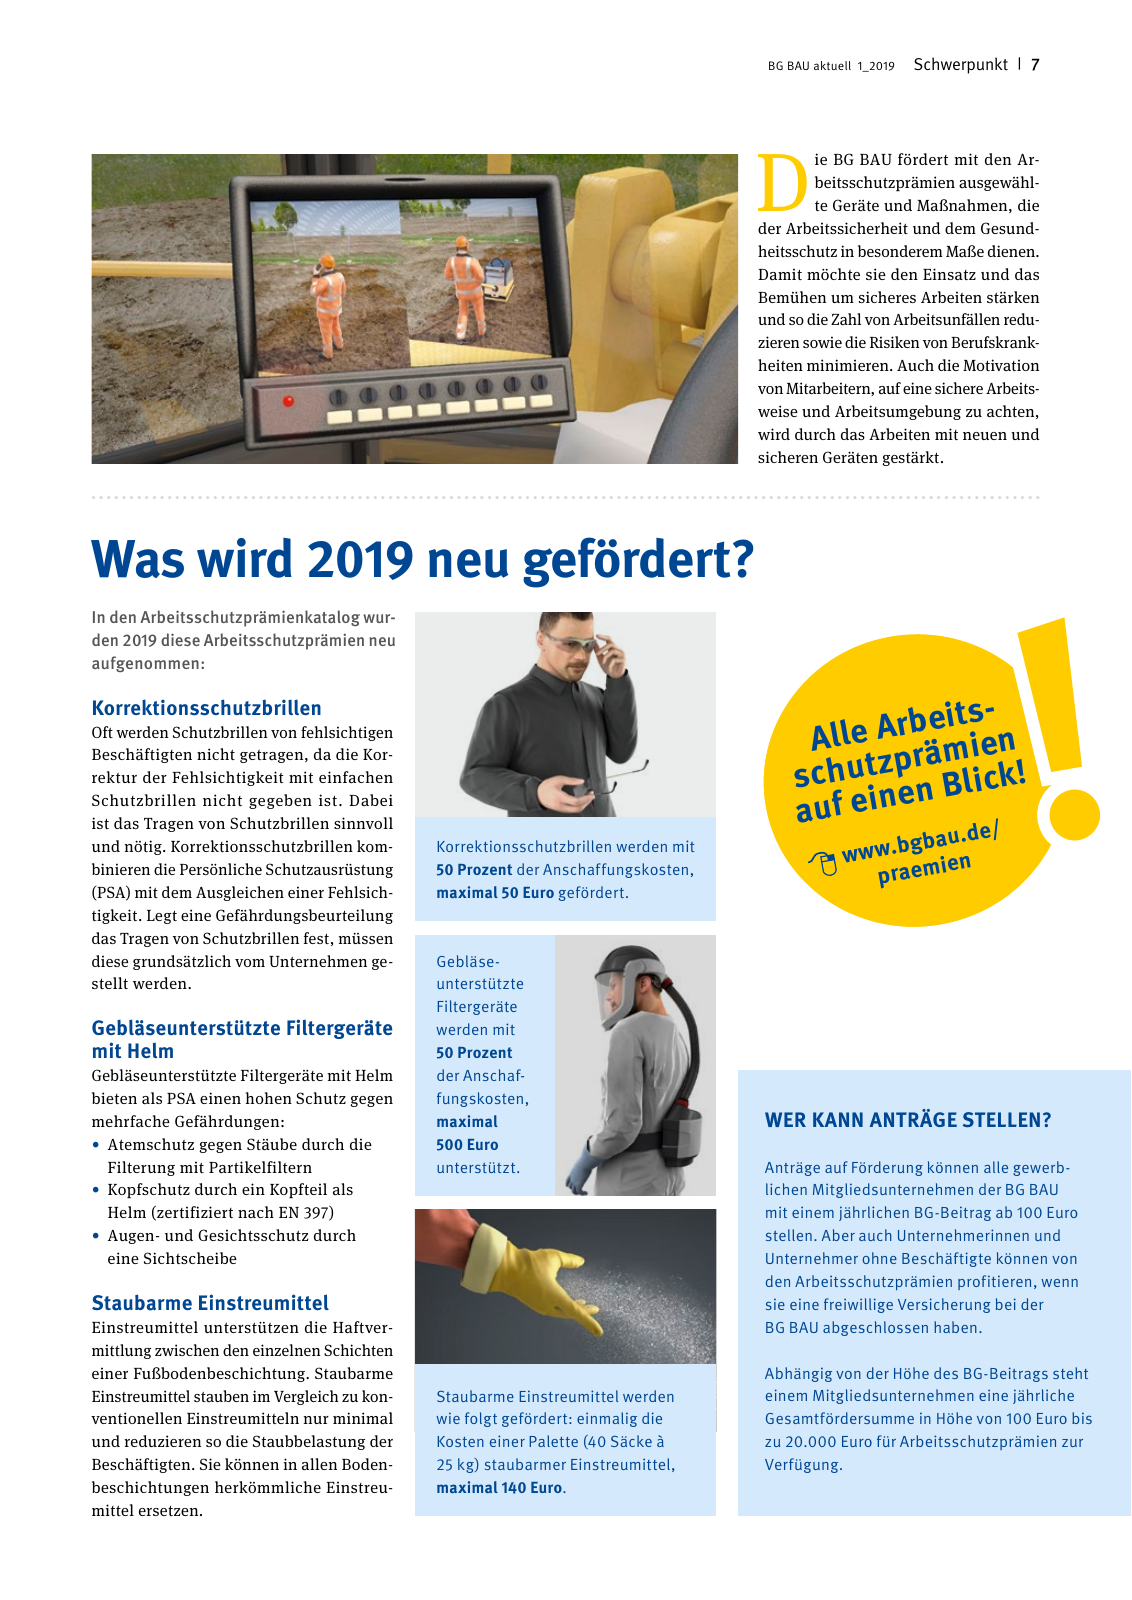 Vorschau BG BAU aktuell 01/2019 Seite 7